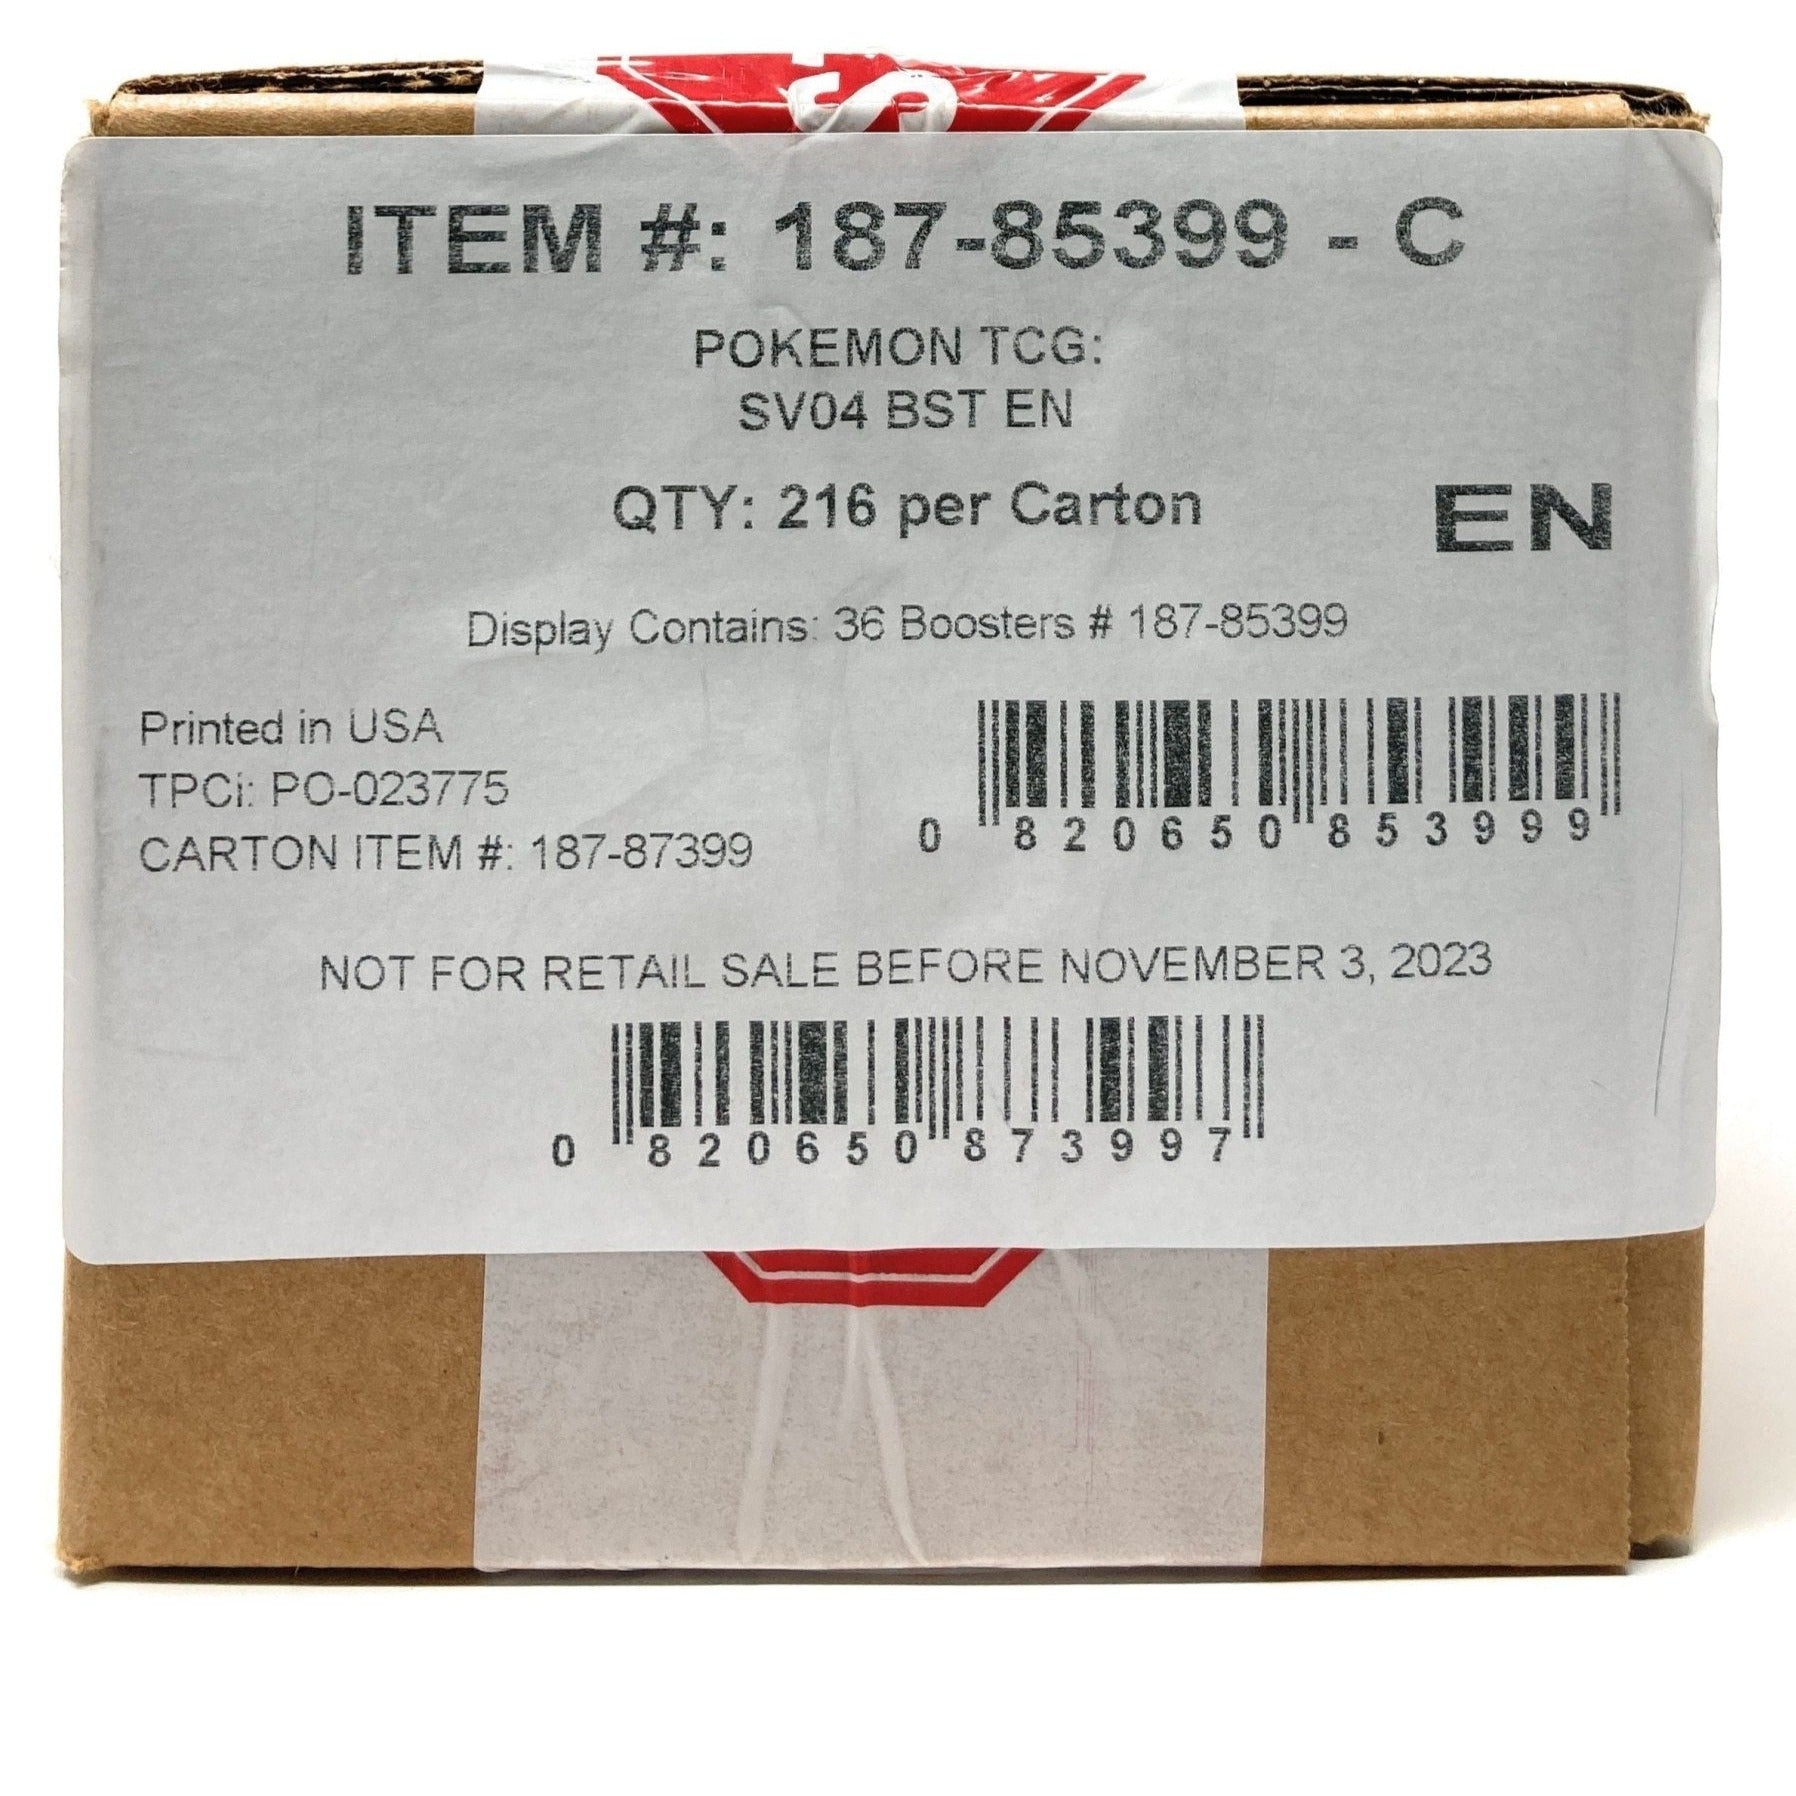 Pokemon Paradox Rift Booster Box 0820650873997 - King Card Canada